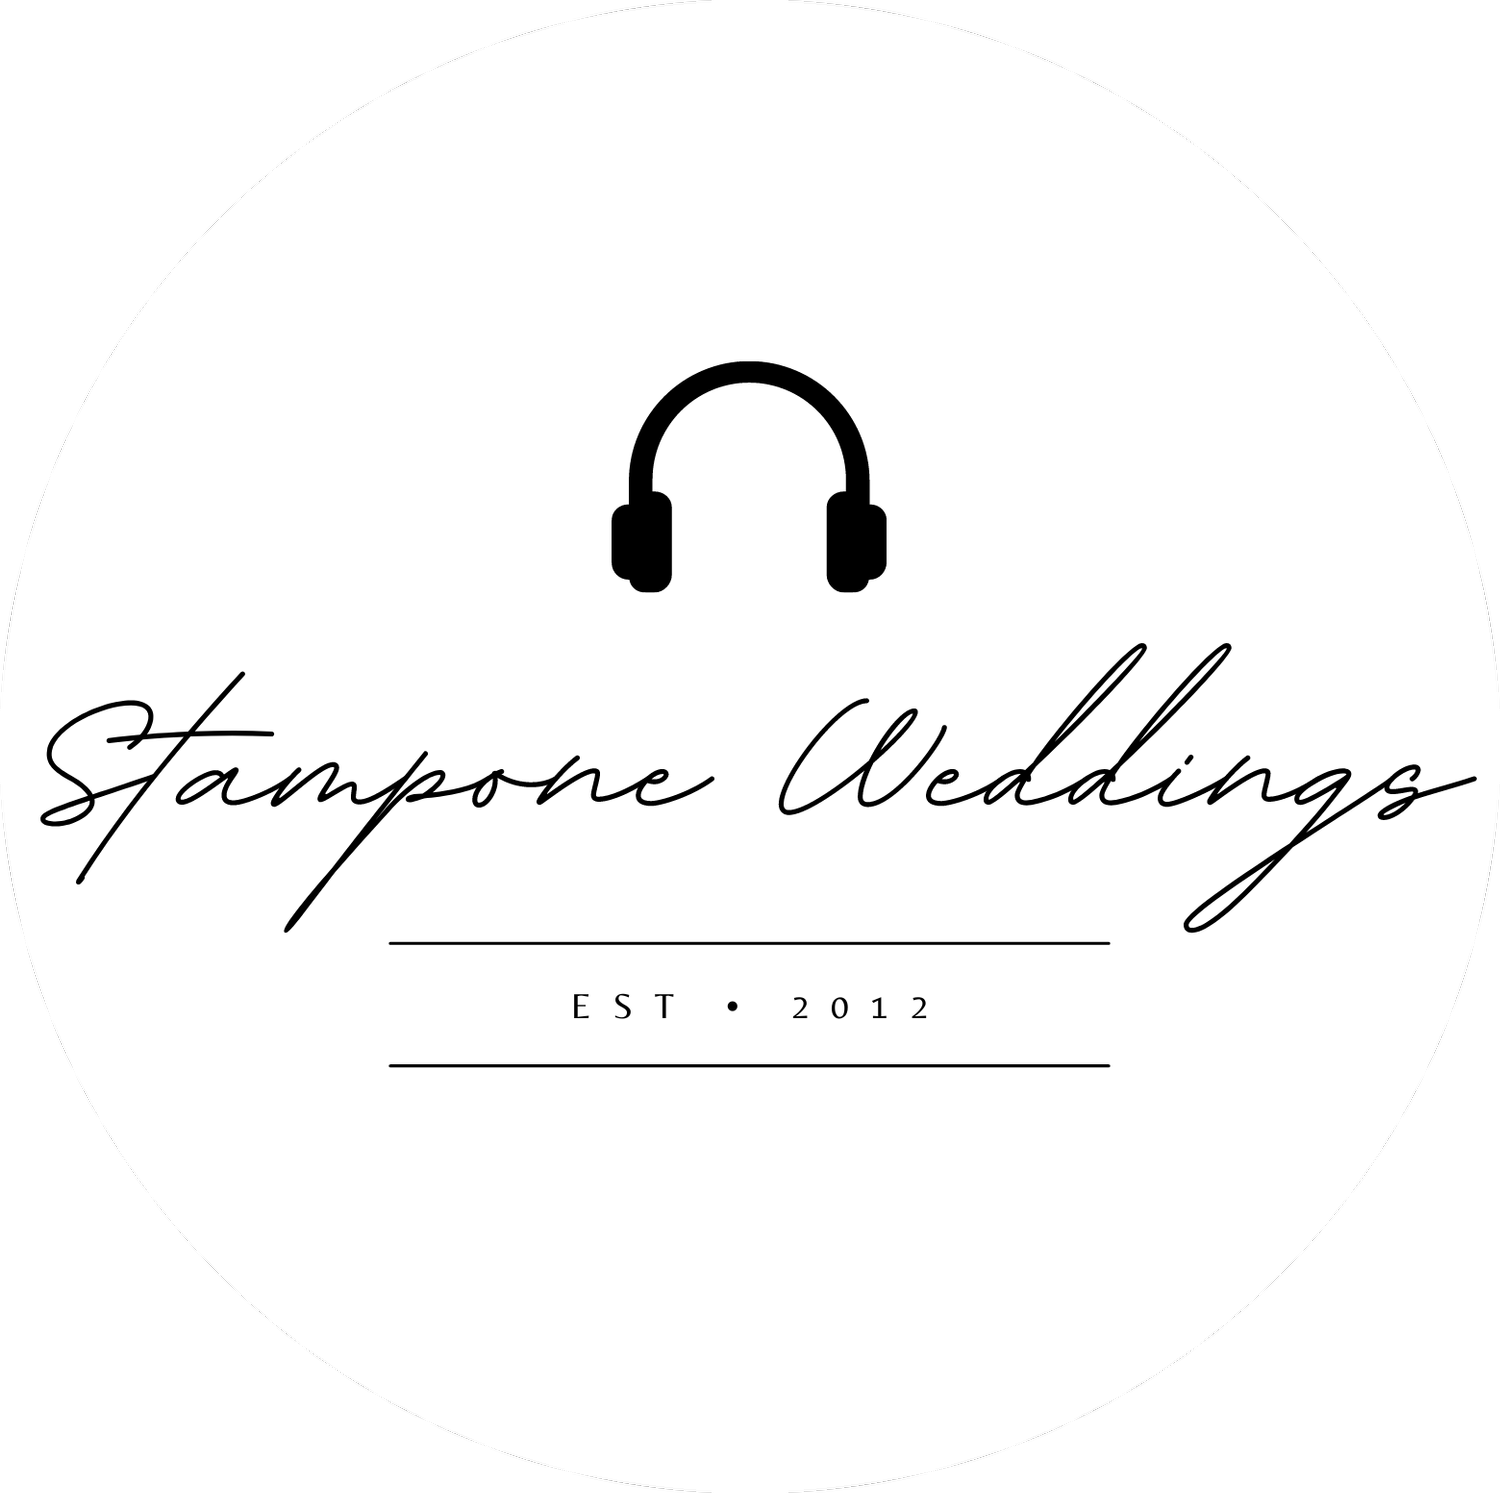 Stampone Weddings